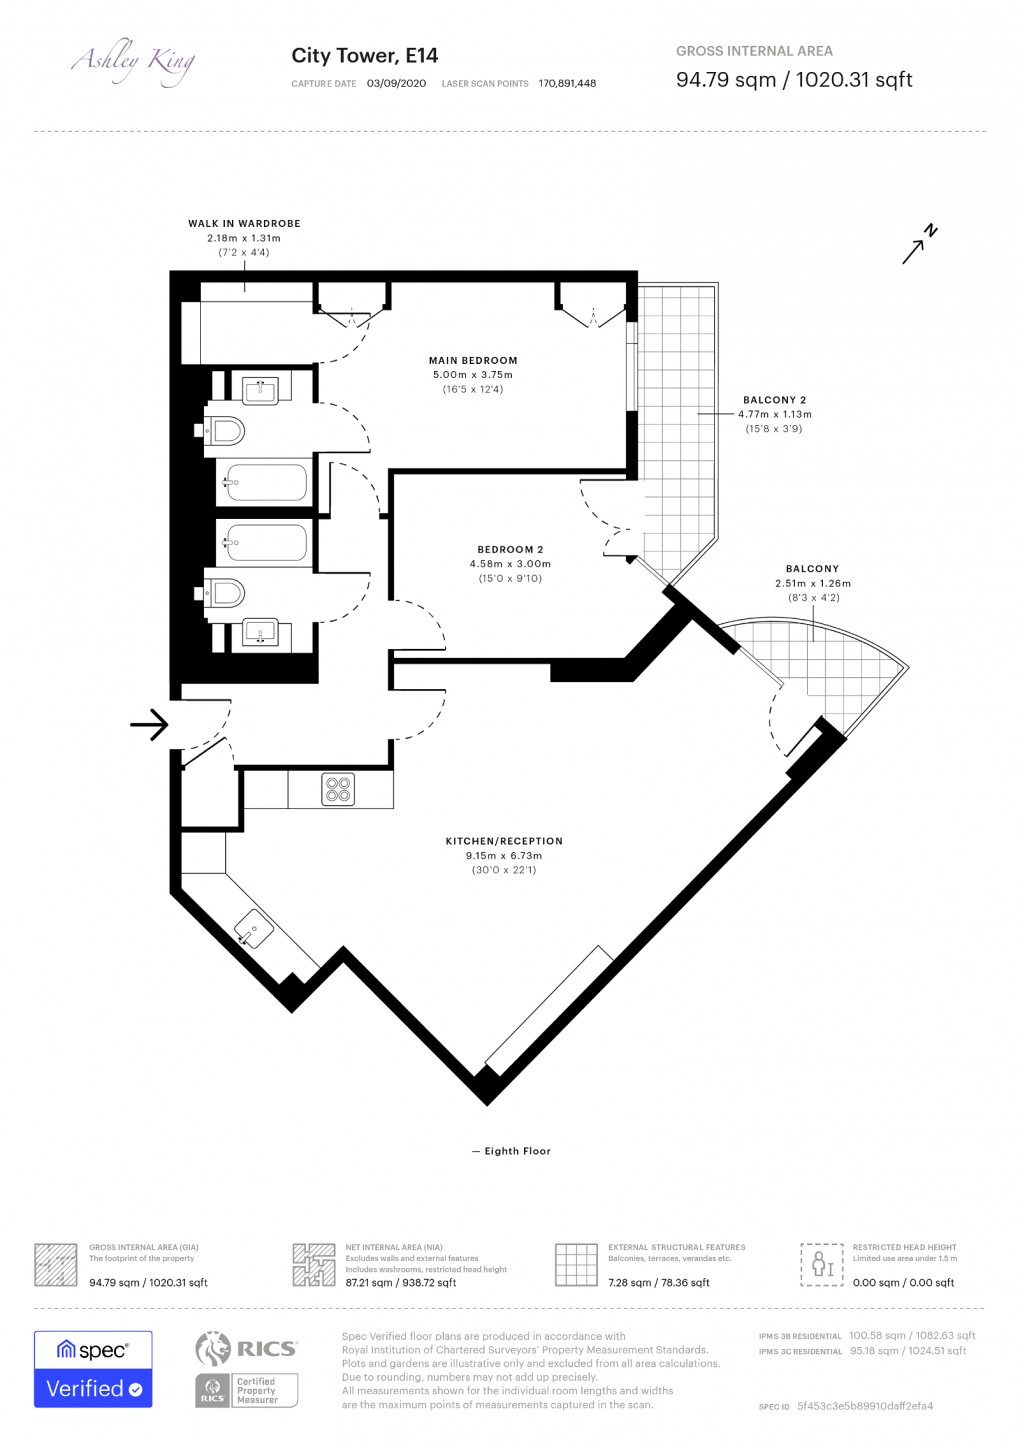 Floorplan for City Tower, Limeharbour, London, E14 9LS